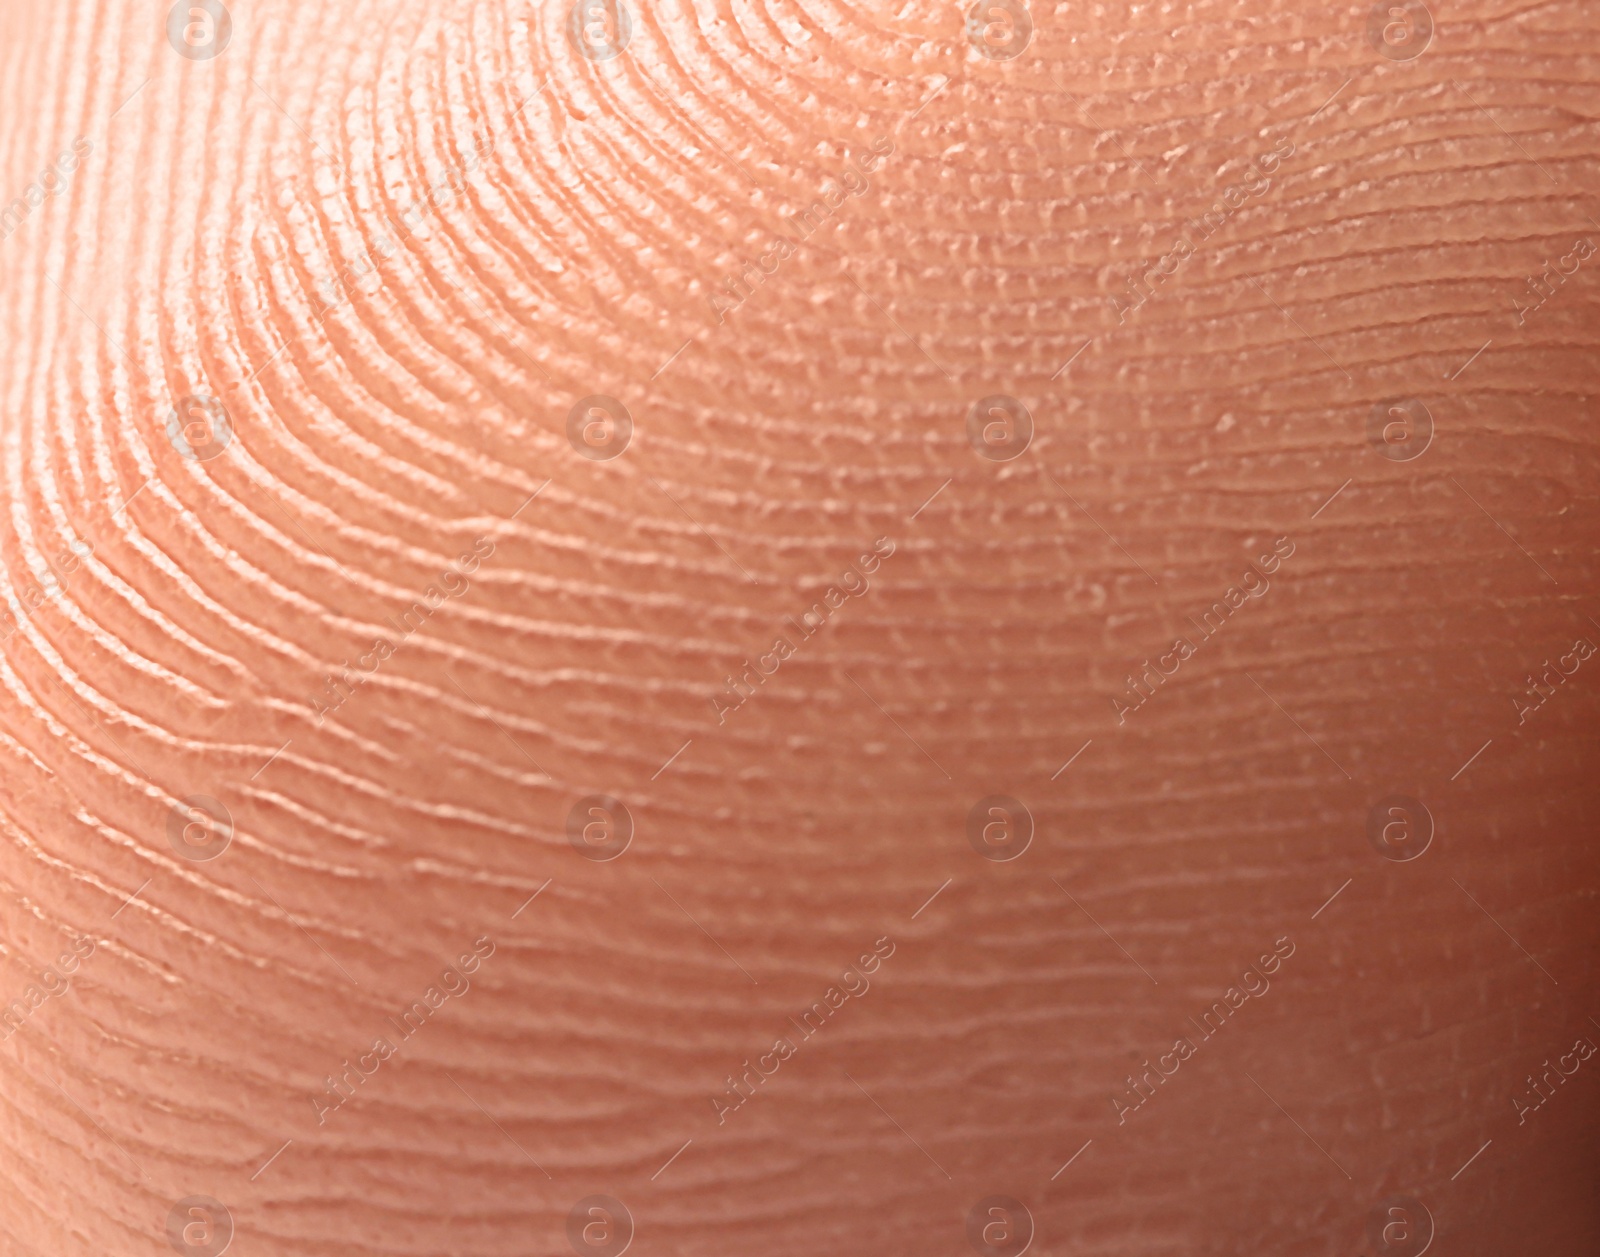 Photo of Closeup view of human finger. Friction ridge pattern